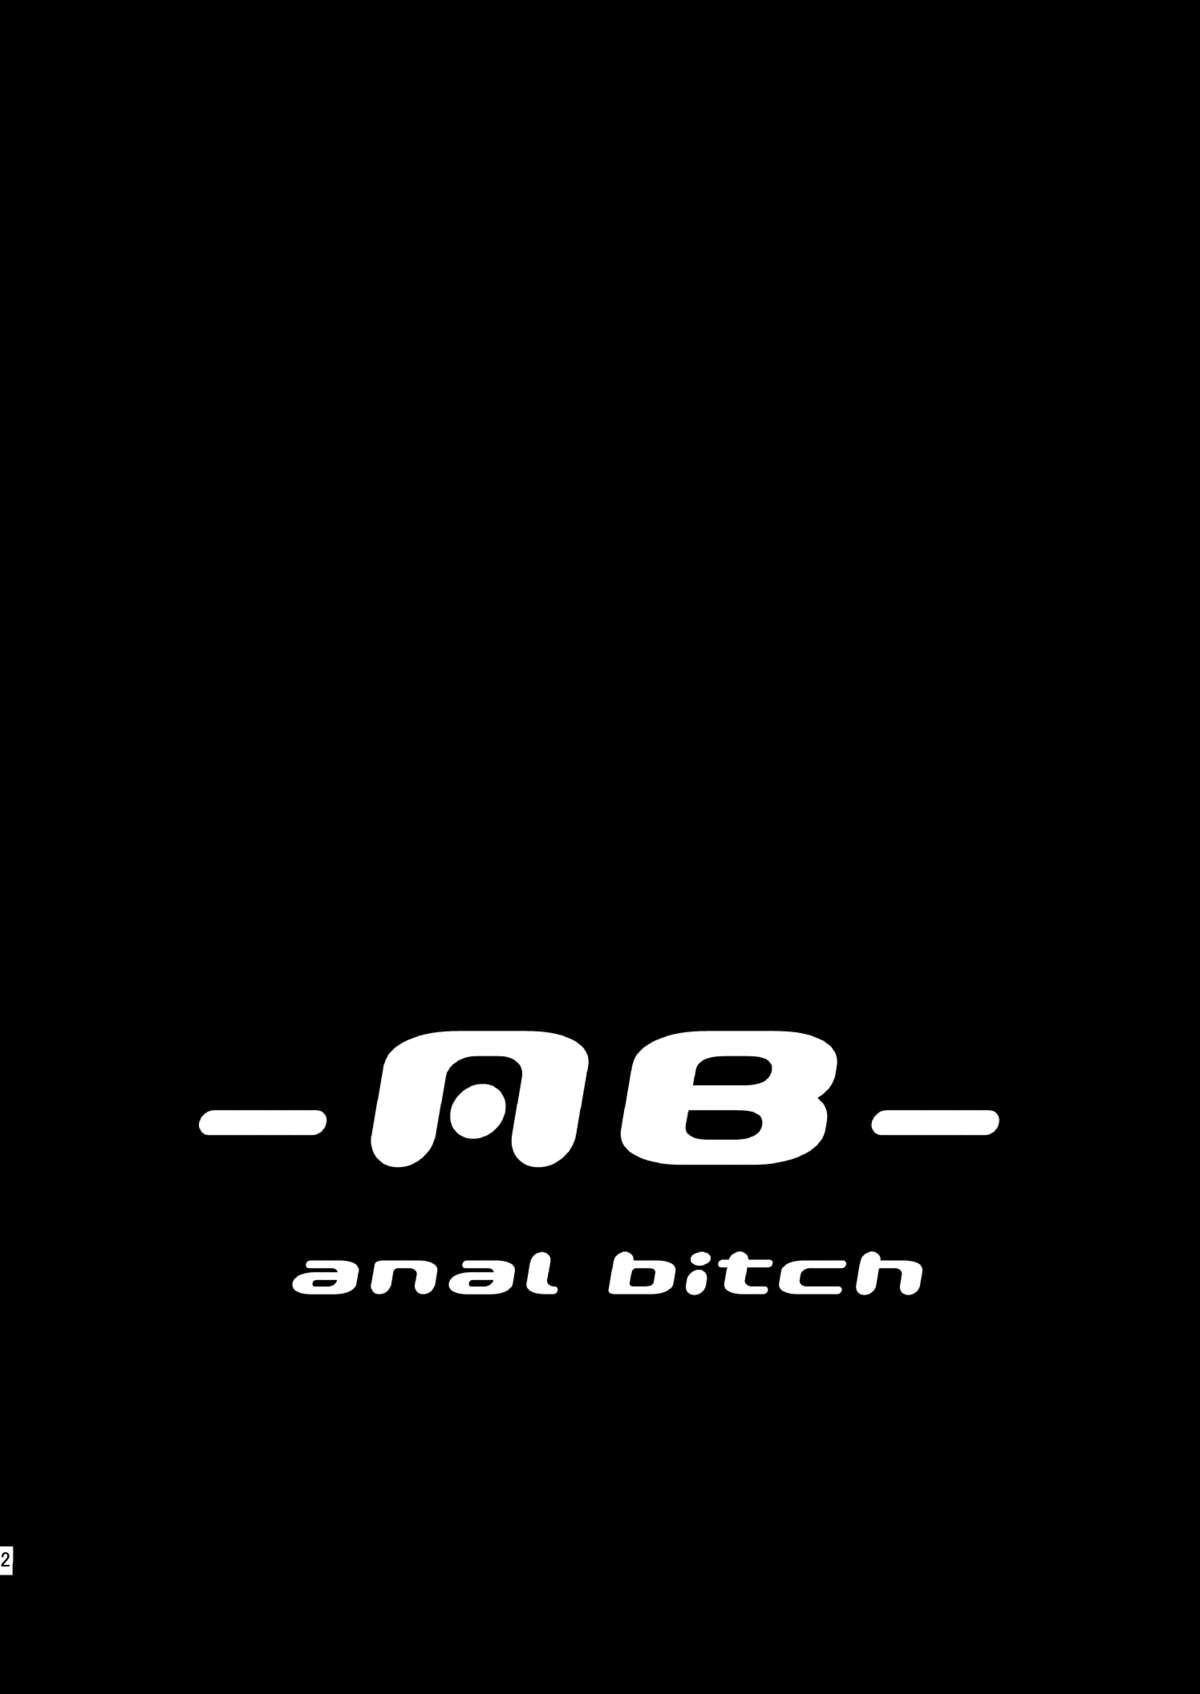 Bareback anal bitch - Ixion saga dt Cunt - Page 3